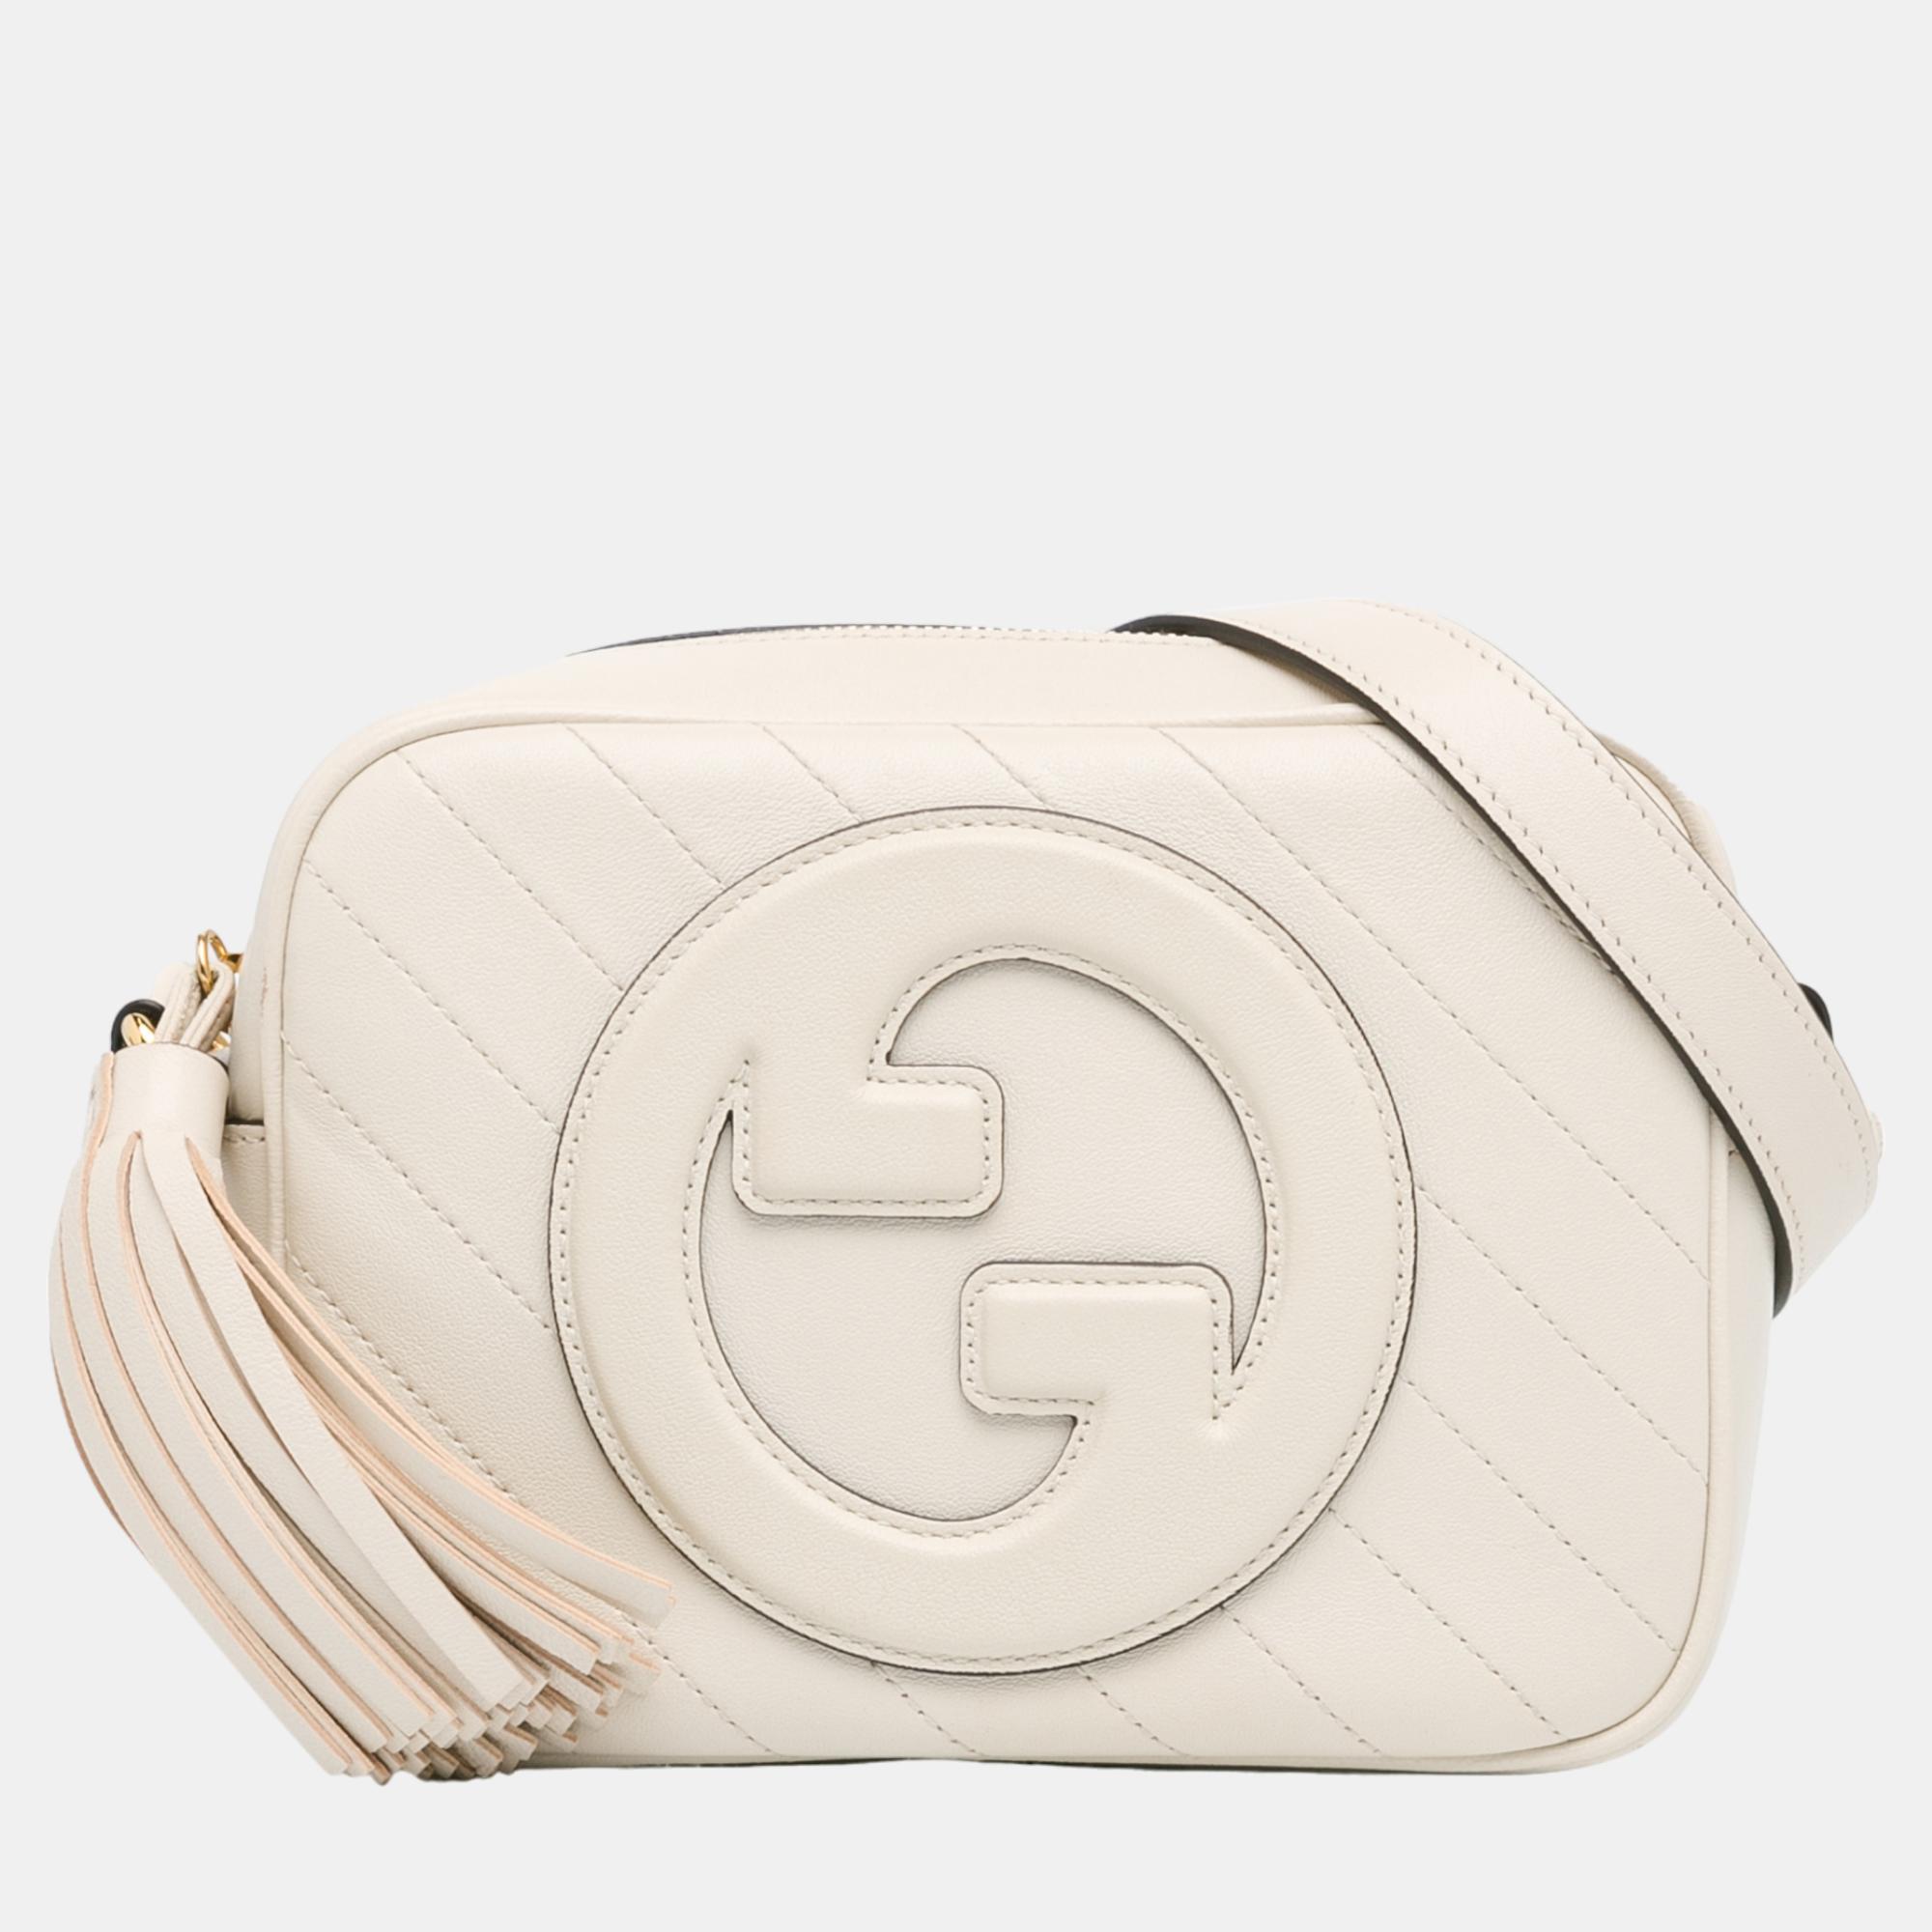 Gucci white small blondie crossbody bag